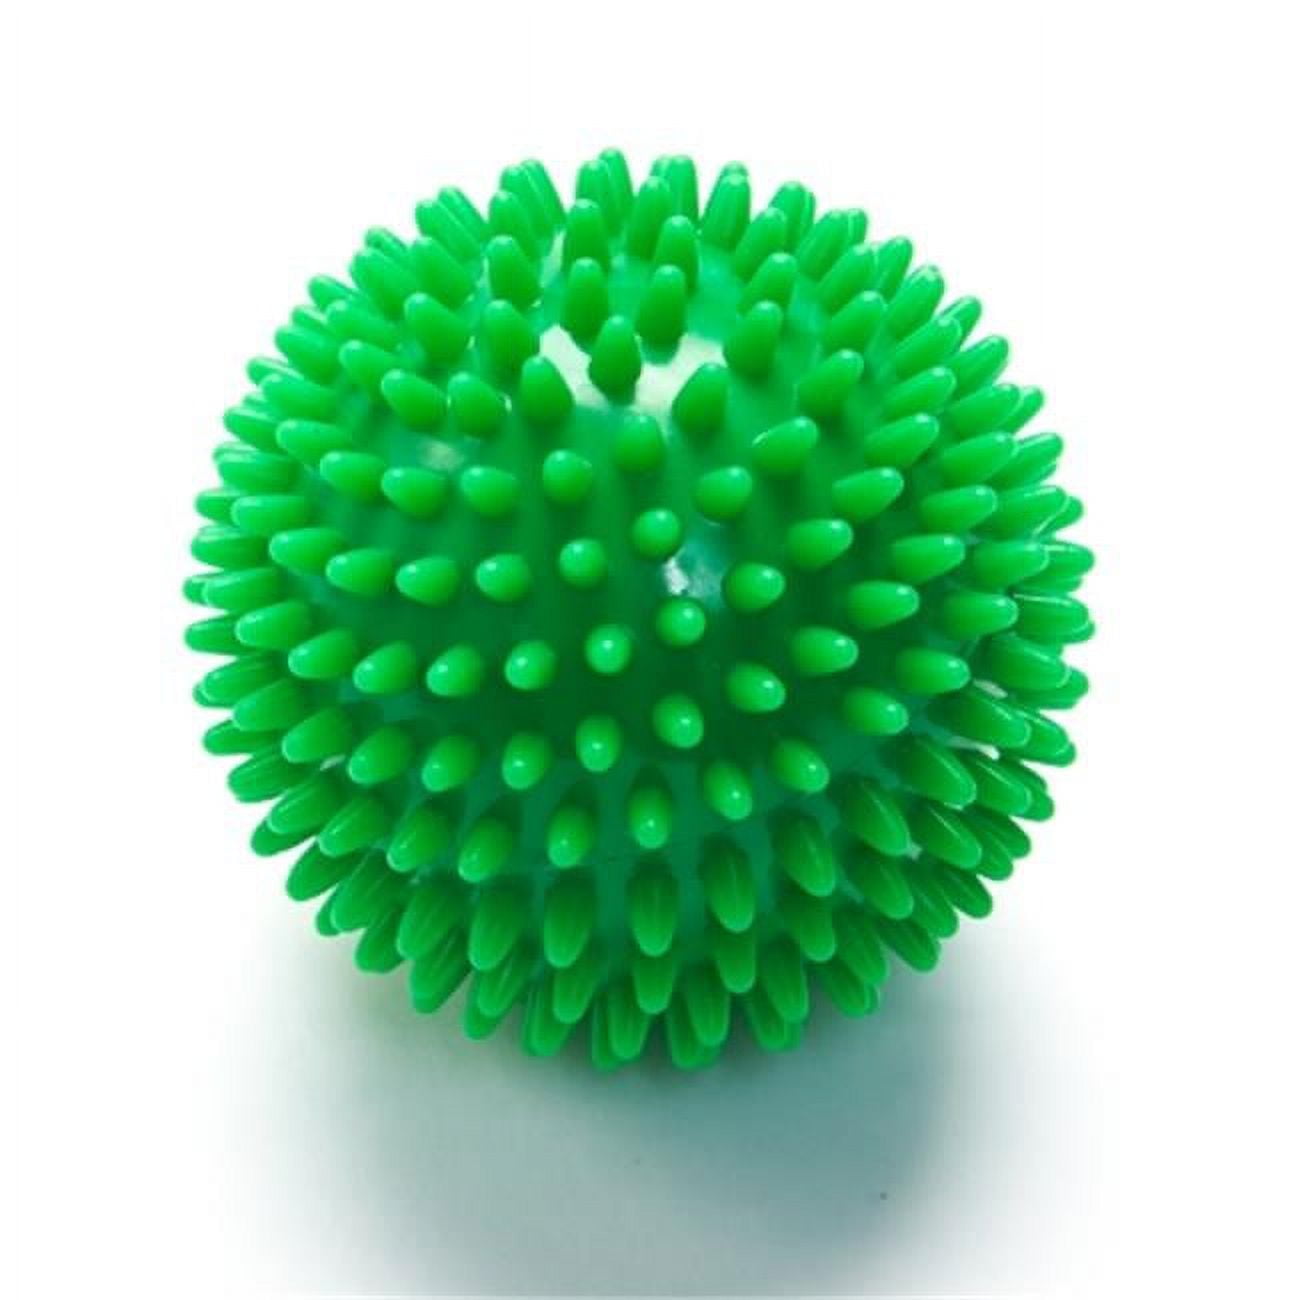 Deep Tissue Massage Ball with Spikes